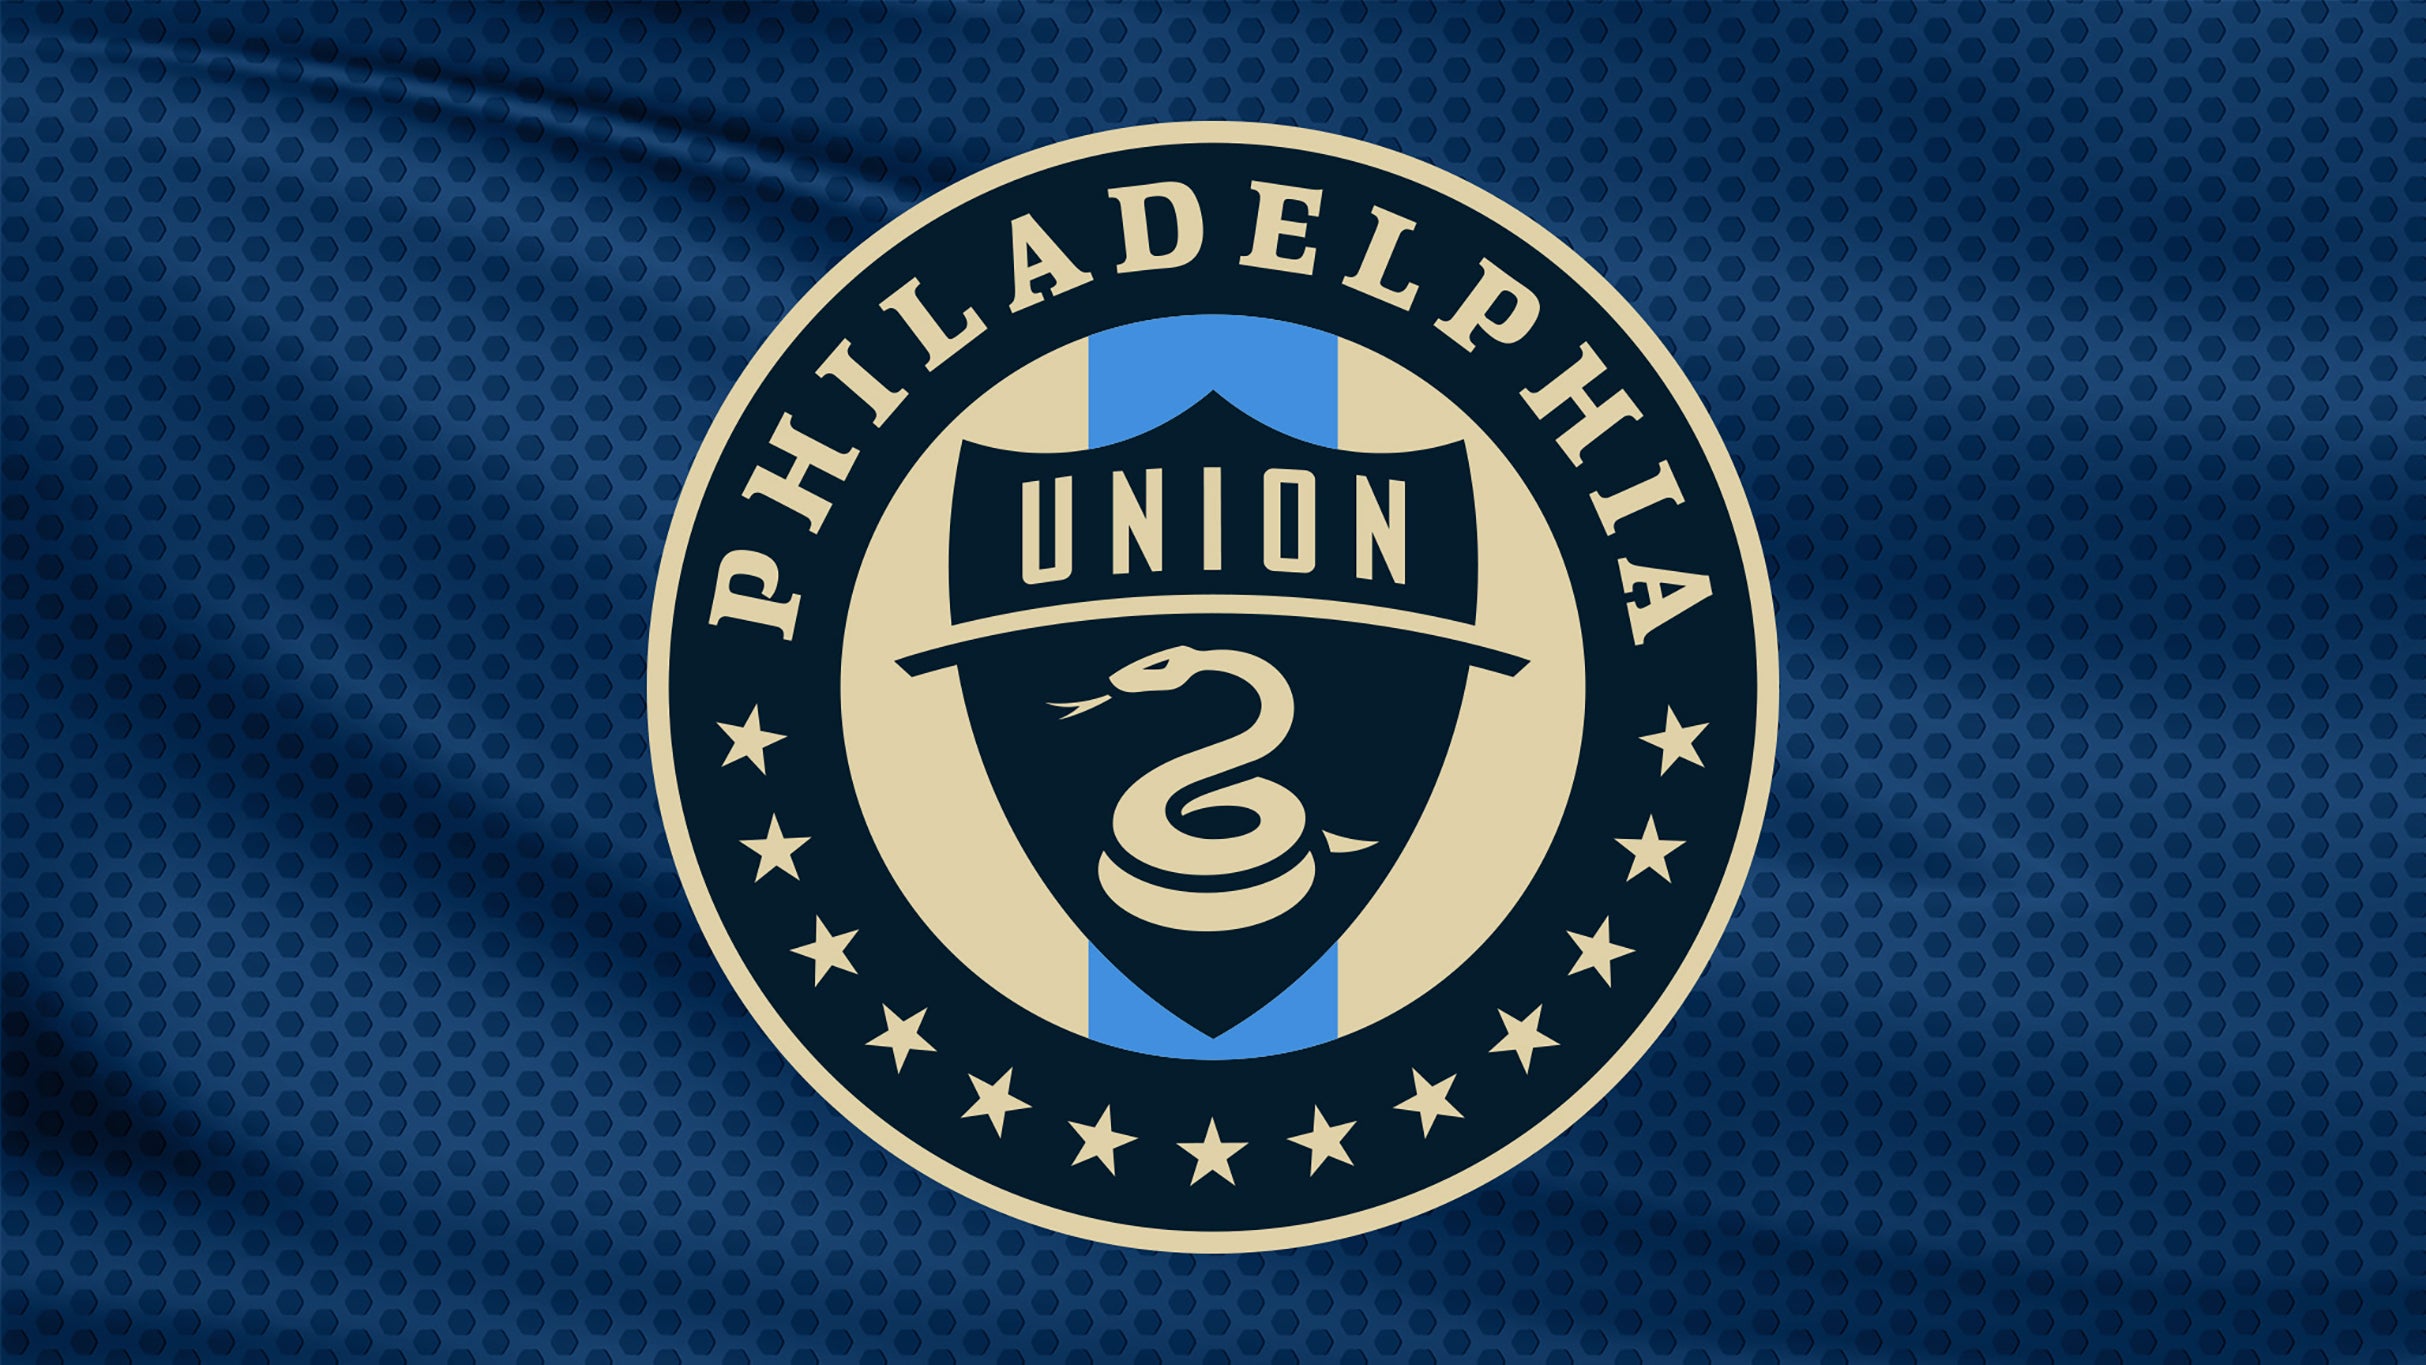 Philadelphia Union vs. Seattle Sounders FC at Subaru Park